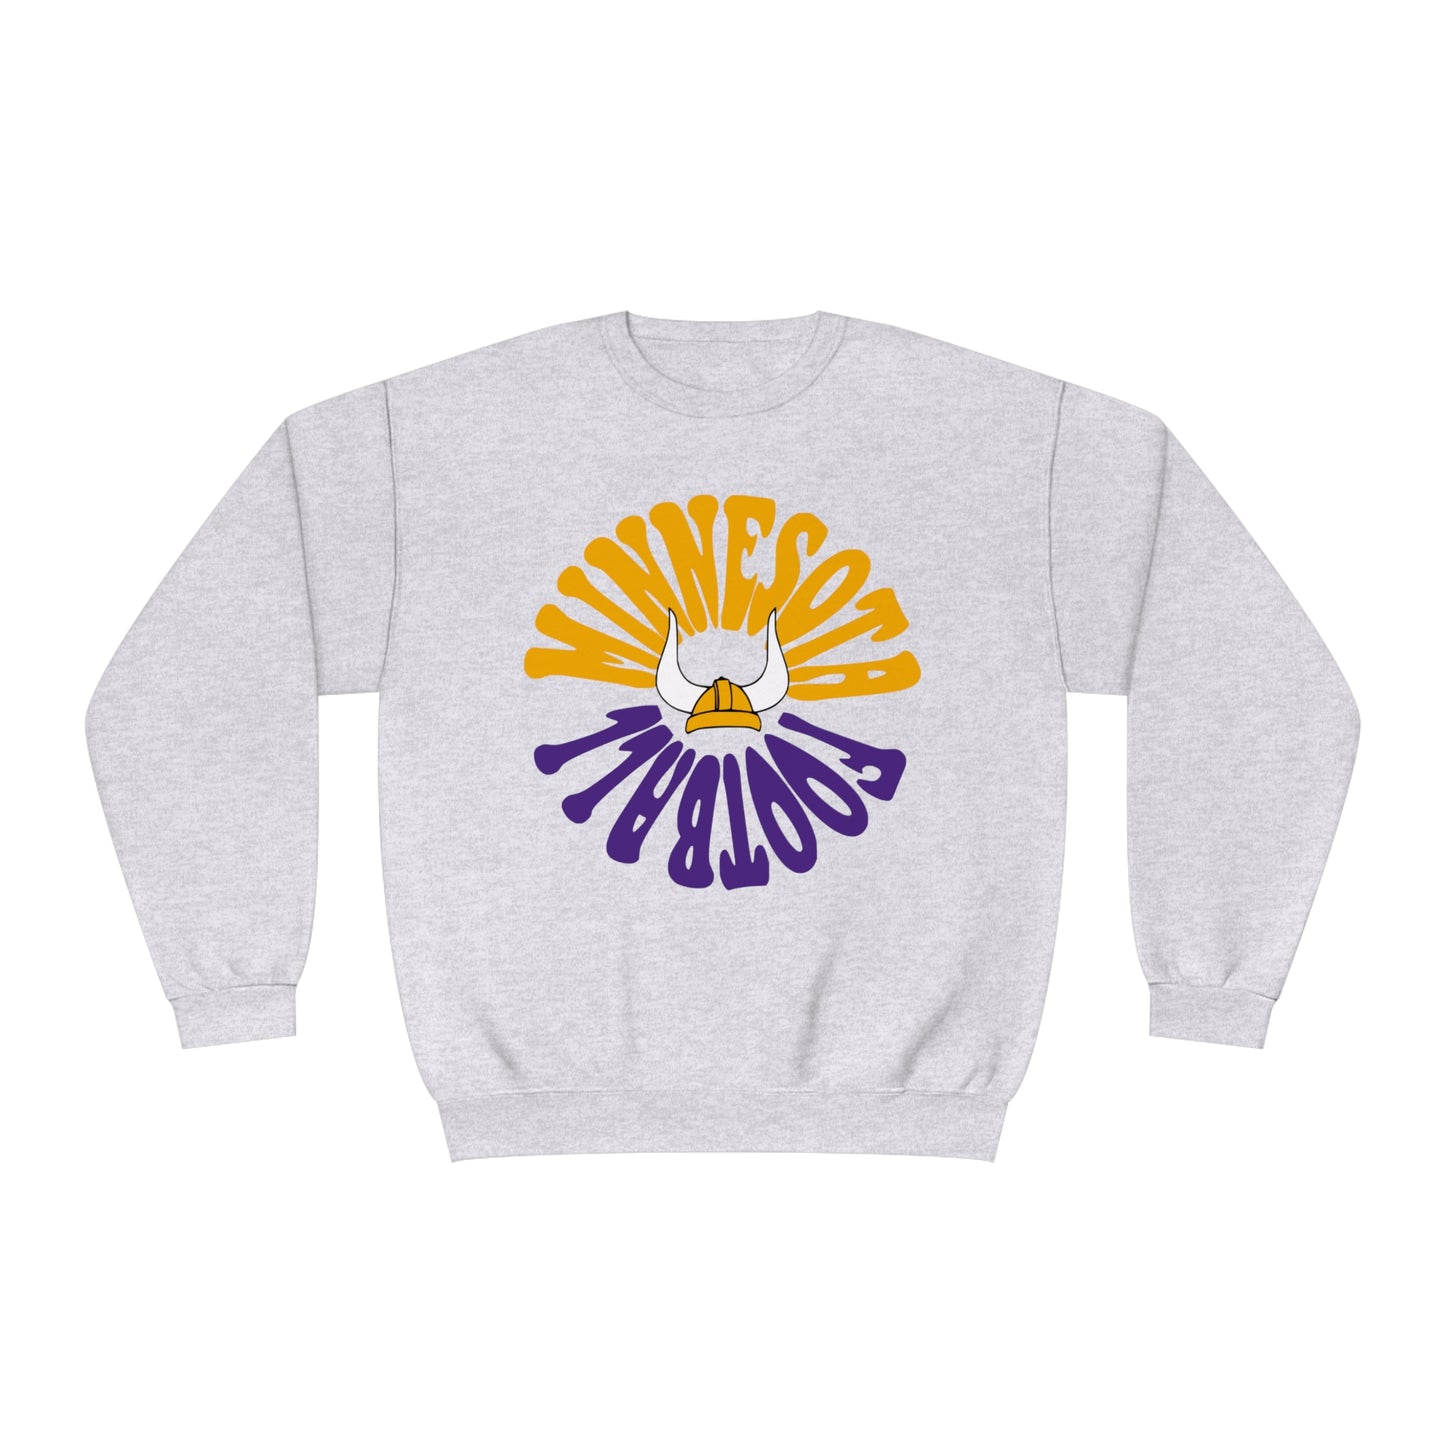 Hippy Retro Minnesota Vikings Crewneck - Retro Unisex Football Sweatshirt - Men's & Women's 90's Oversized Hoodie - Design 2